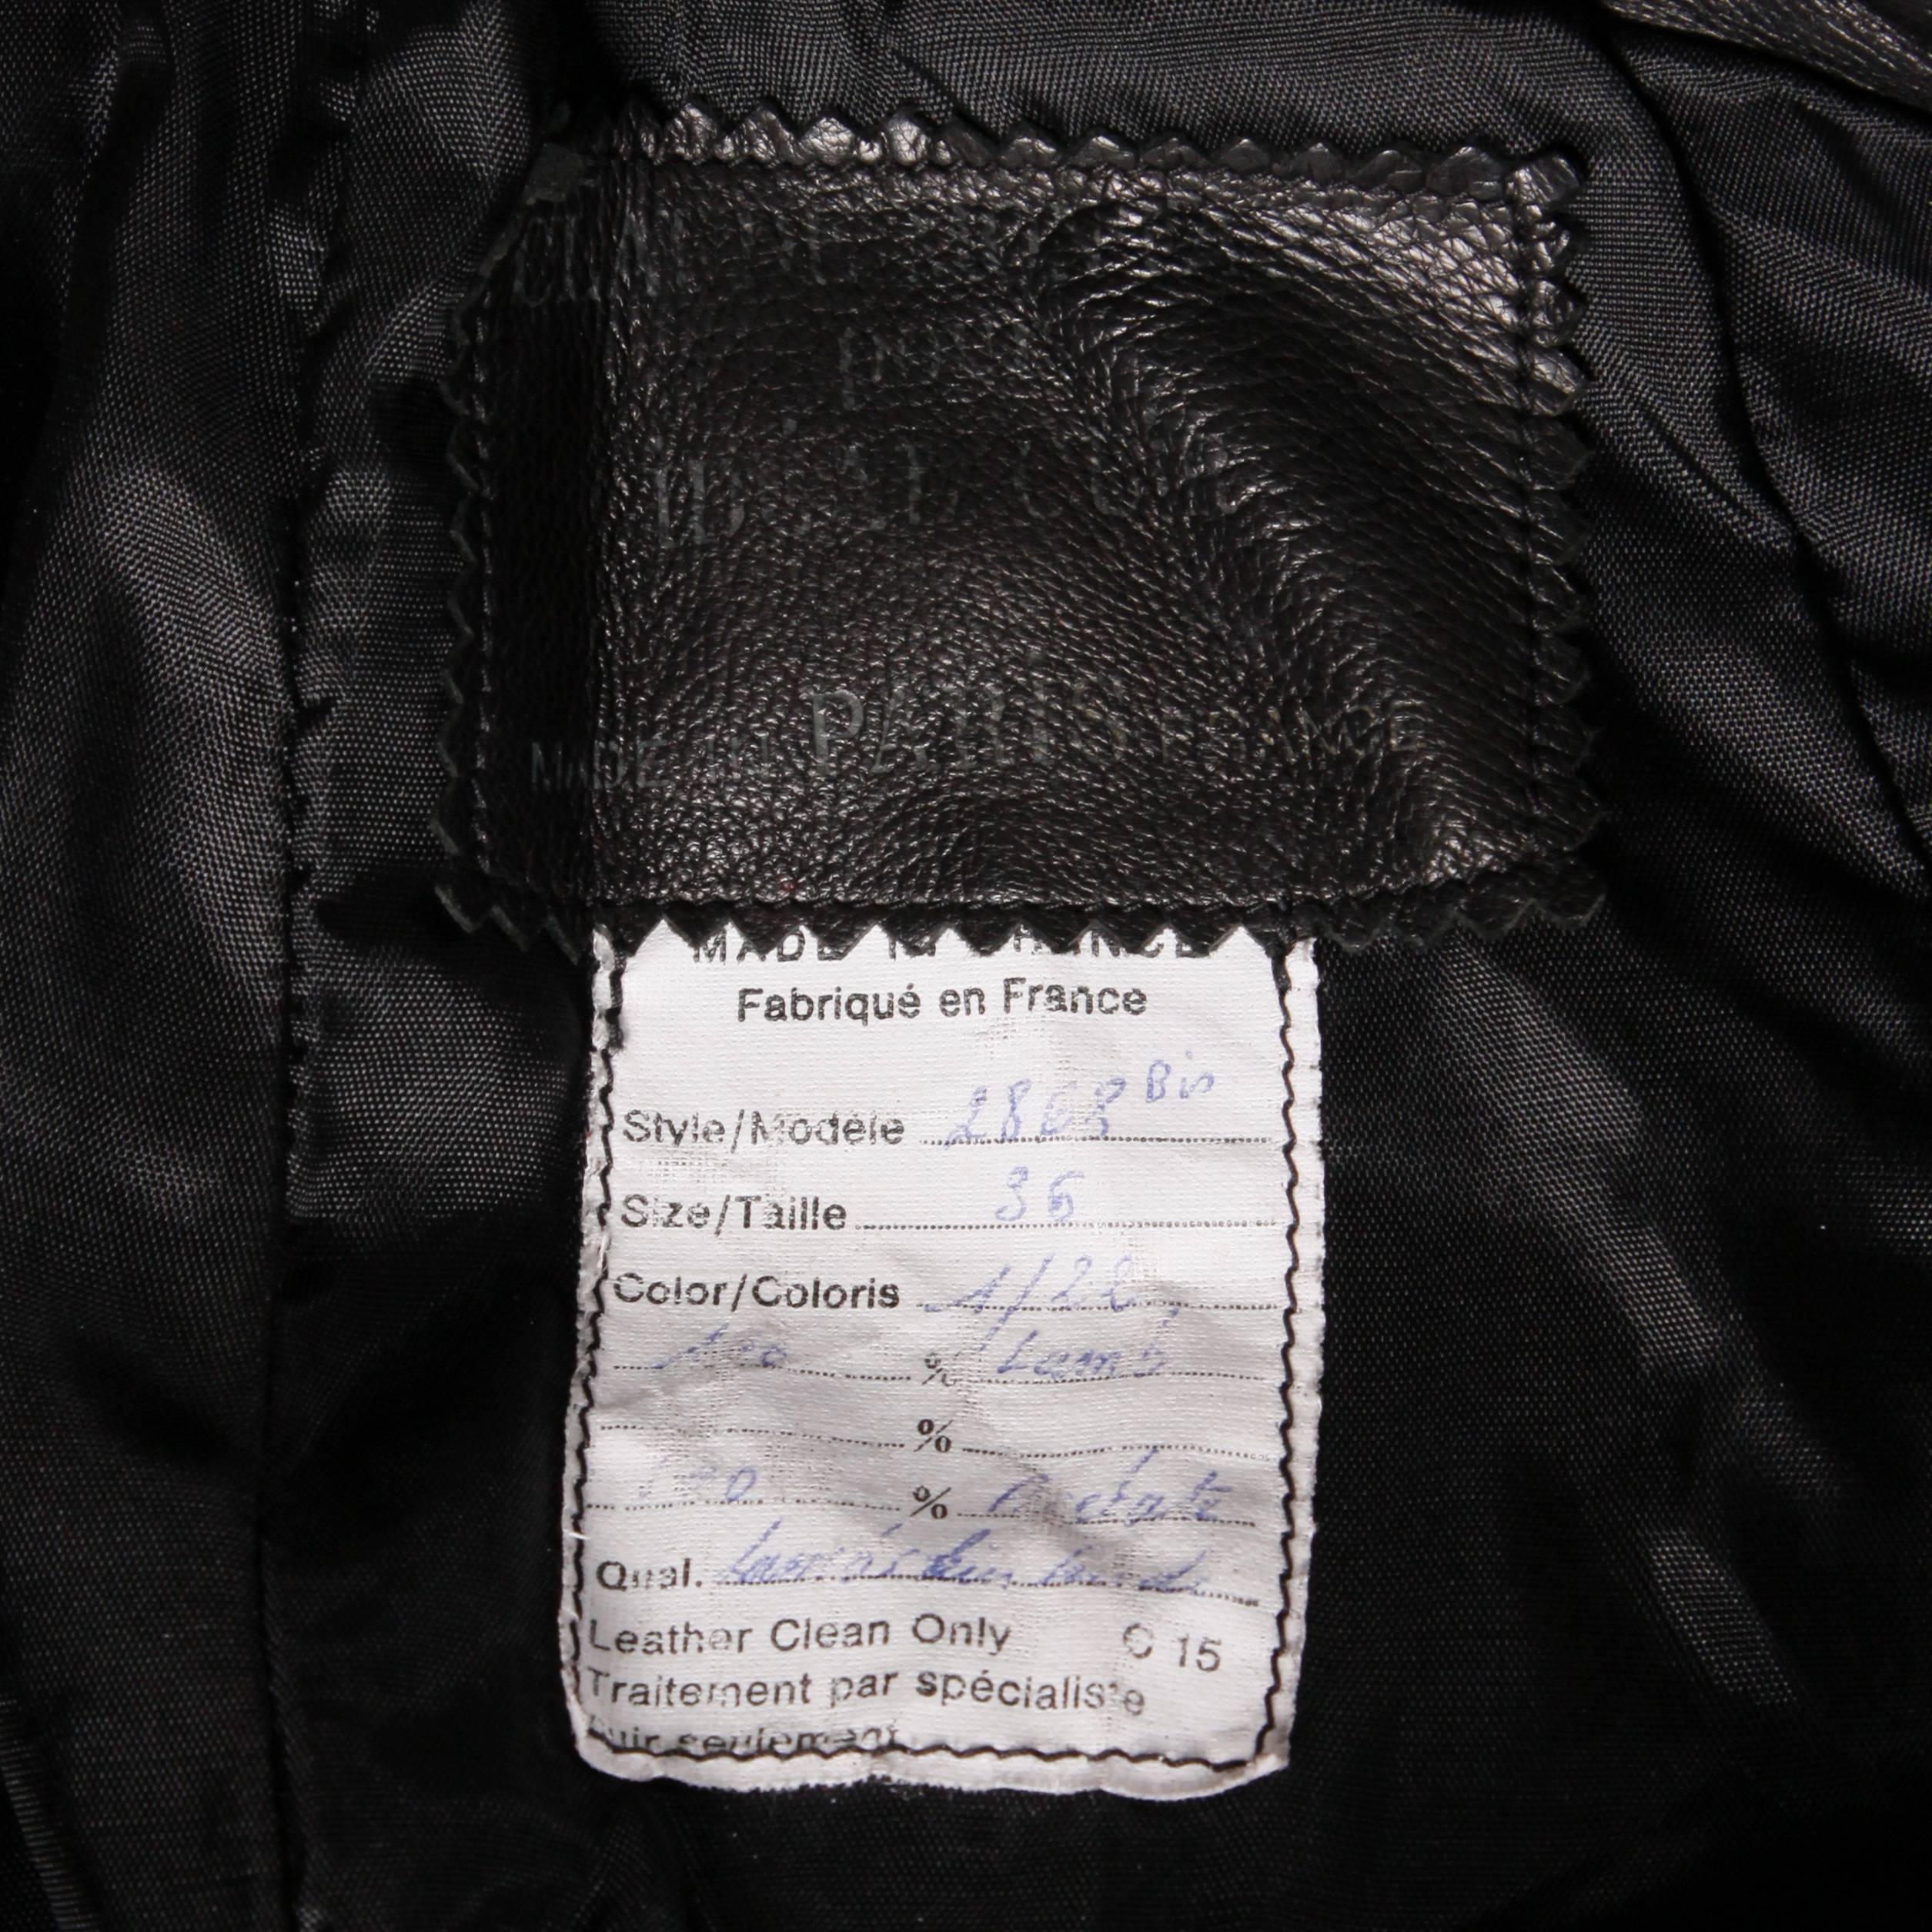 leather gaucho pants